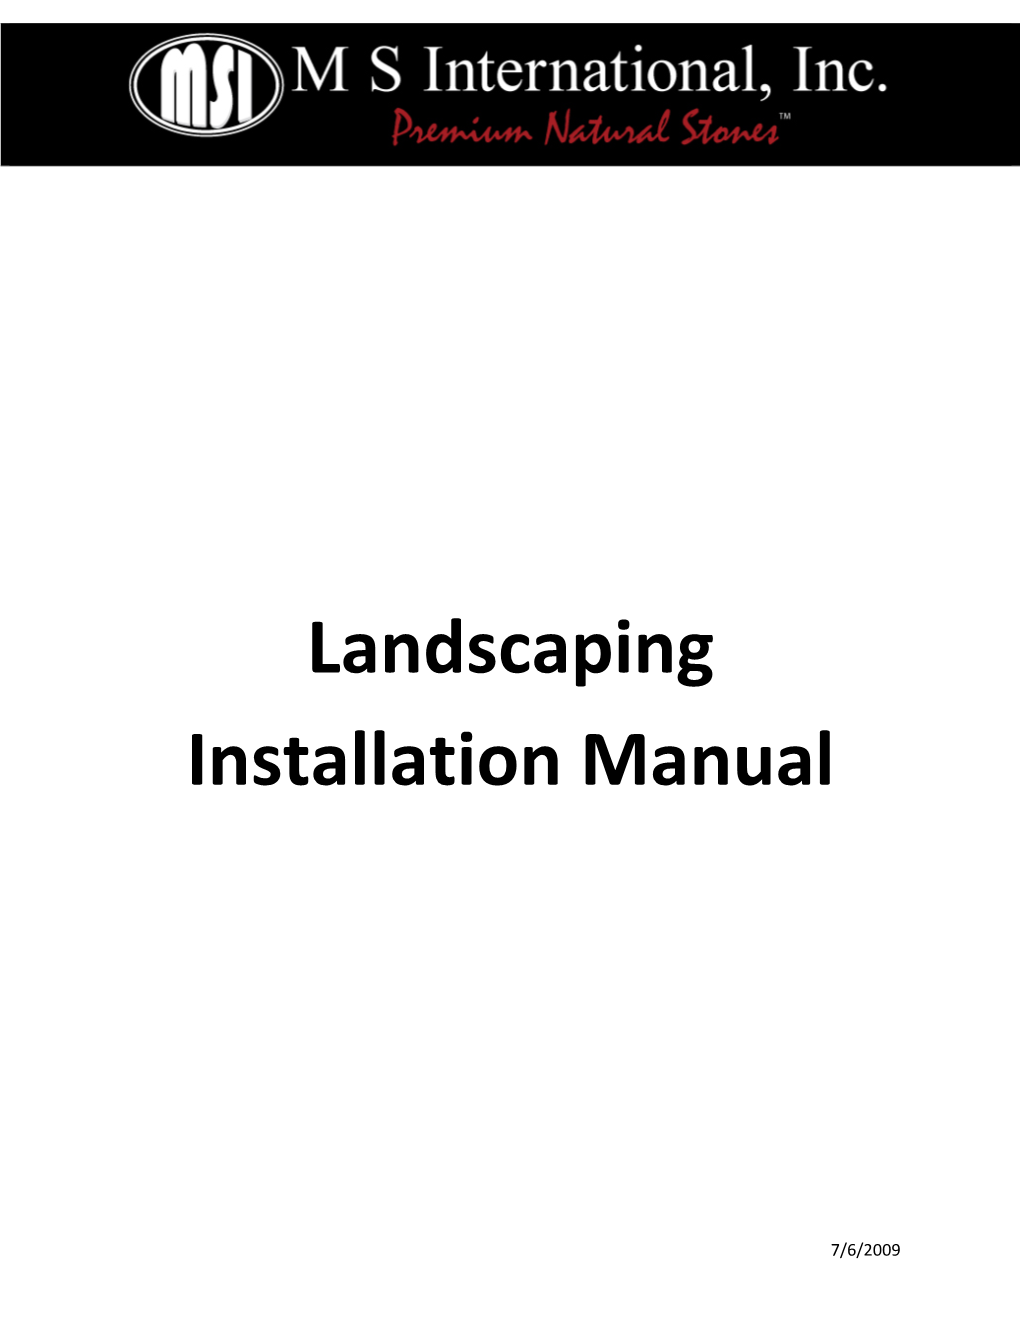 Landscaping Installation Manual